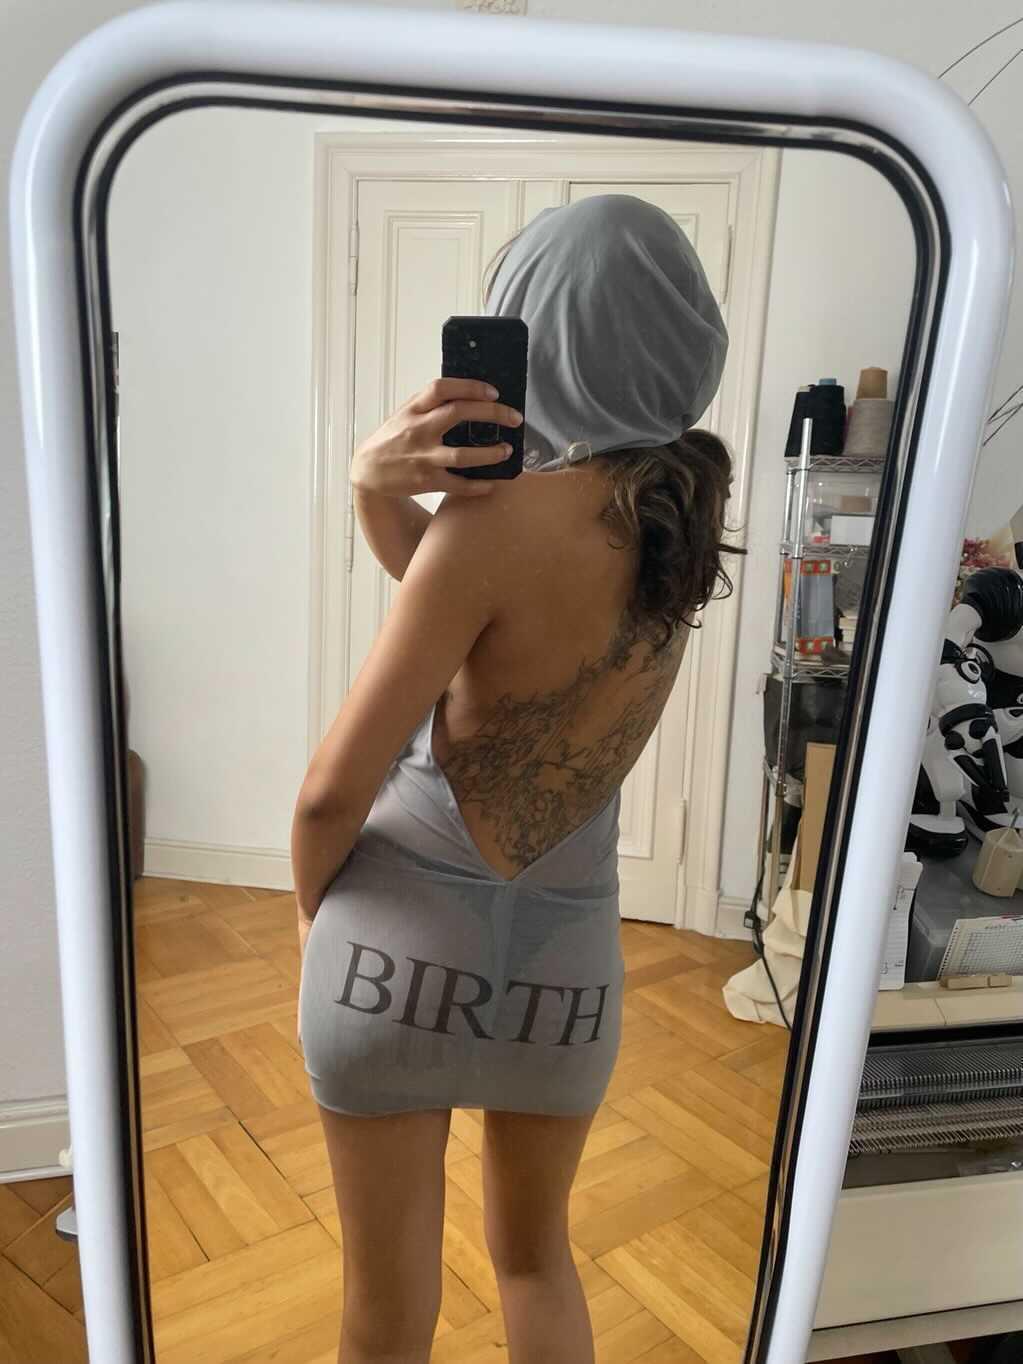 ex-myszka "birth" embryo dress